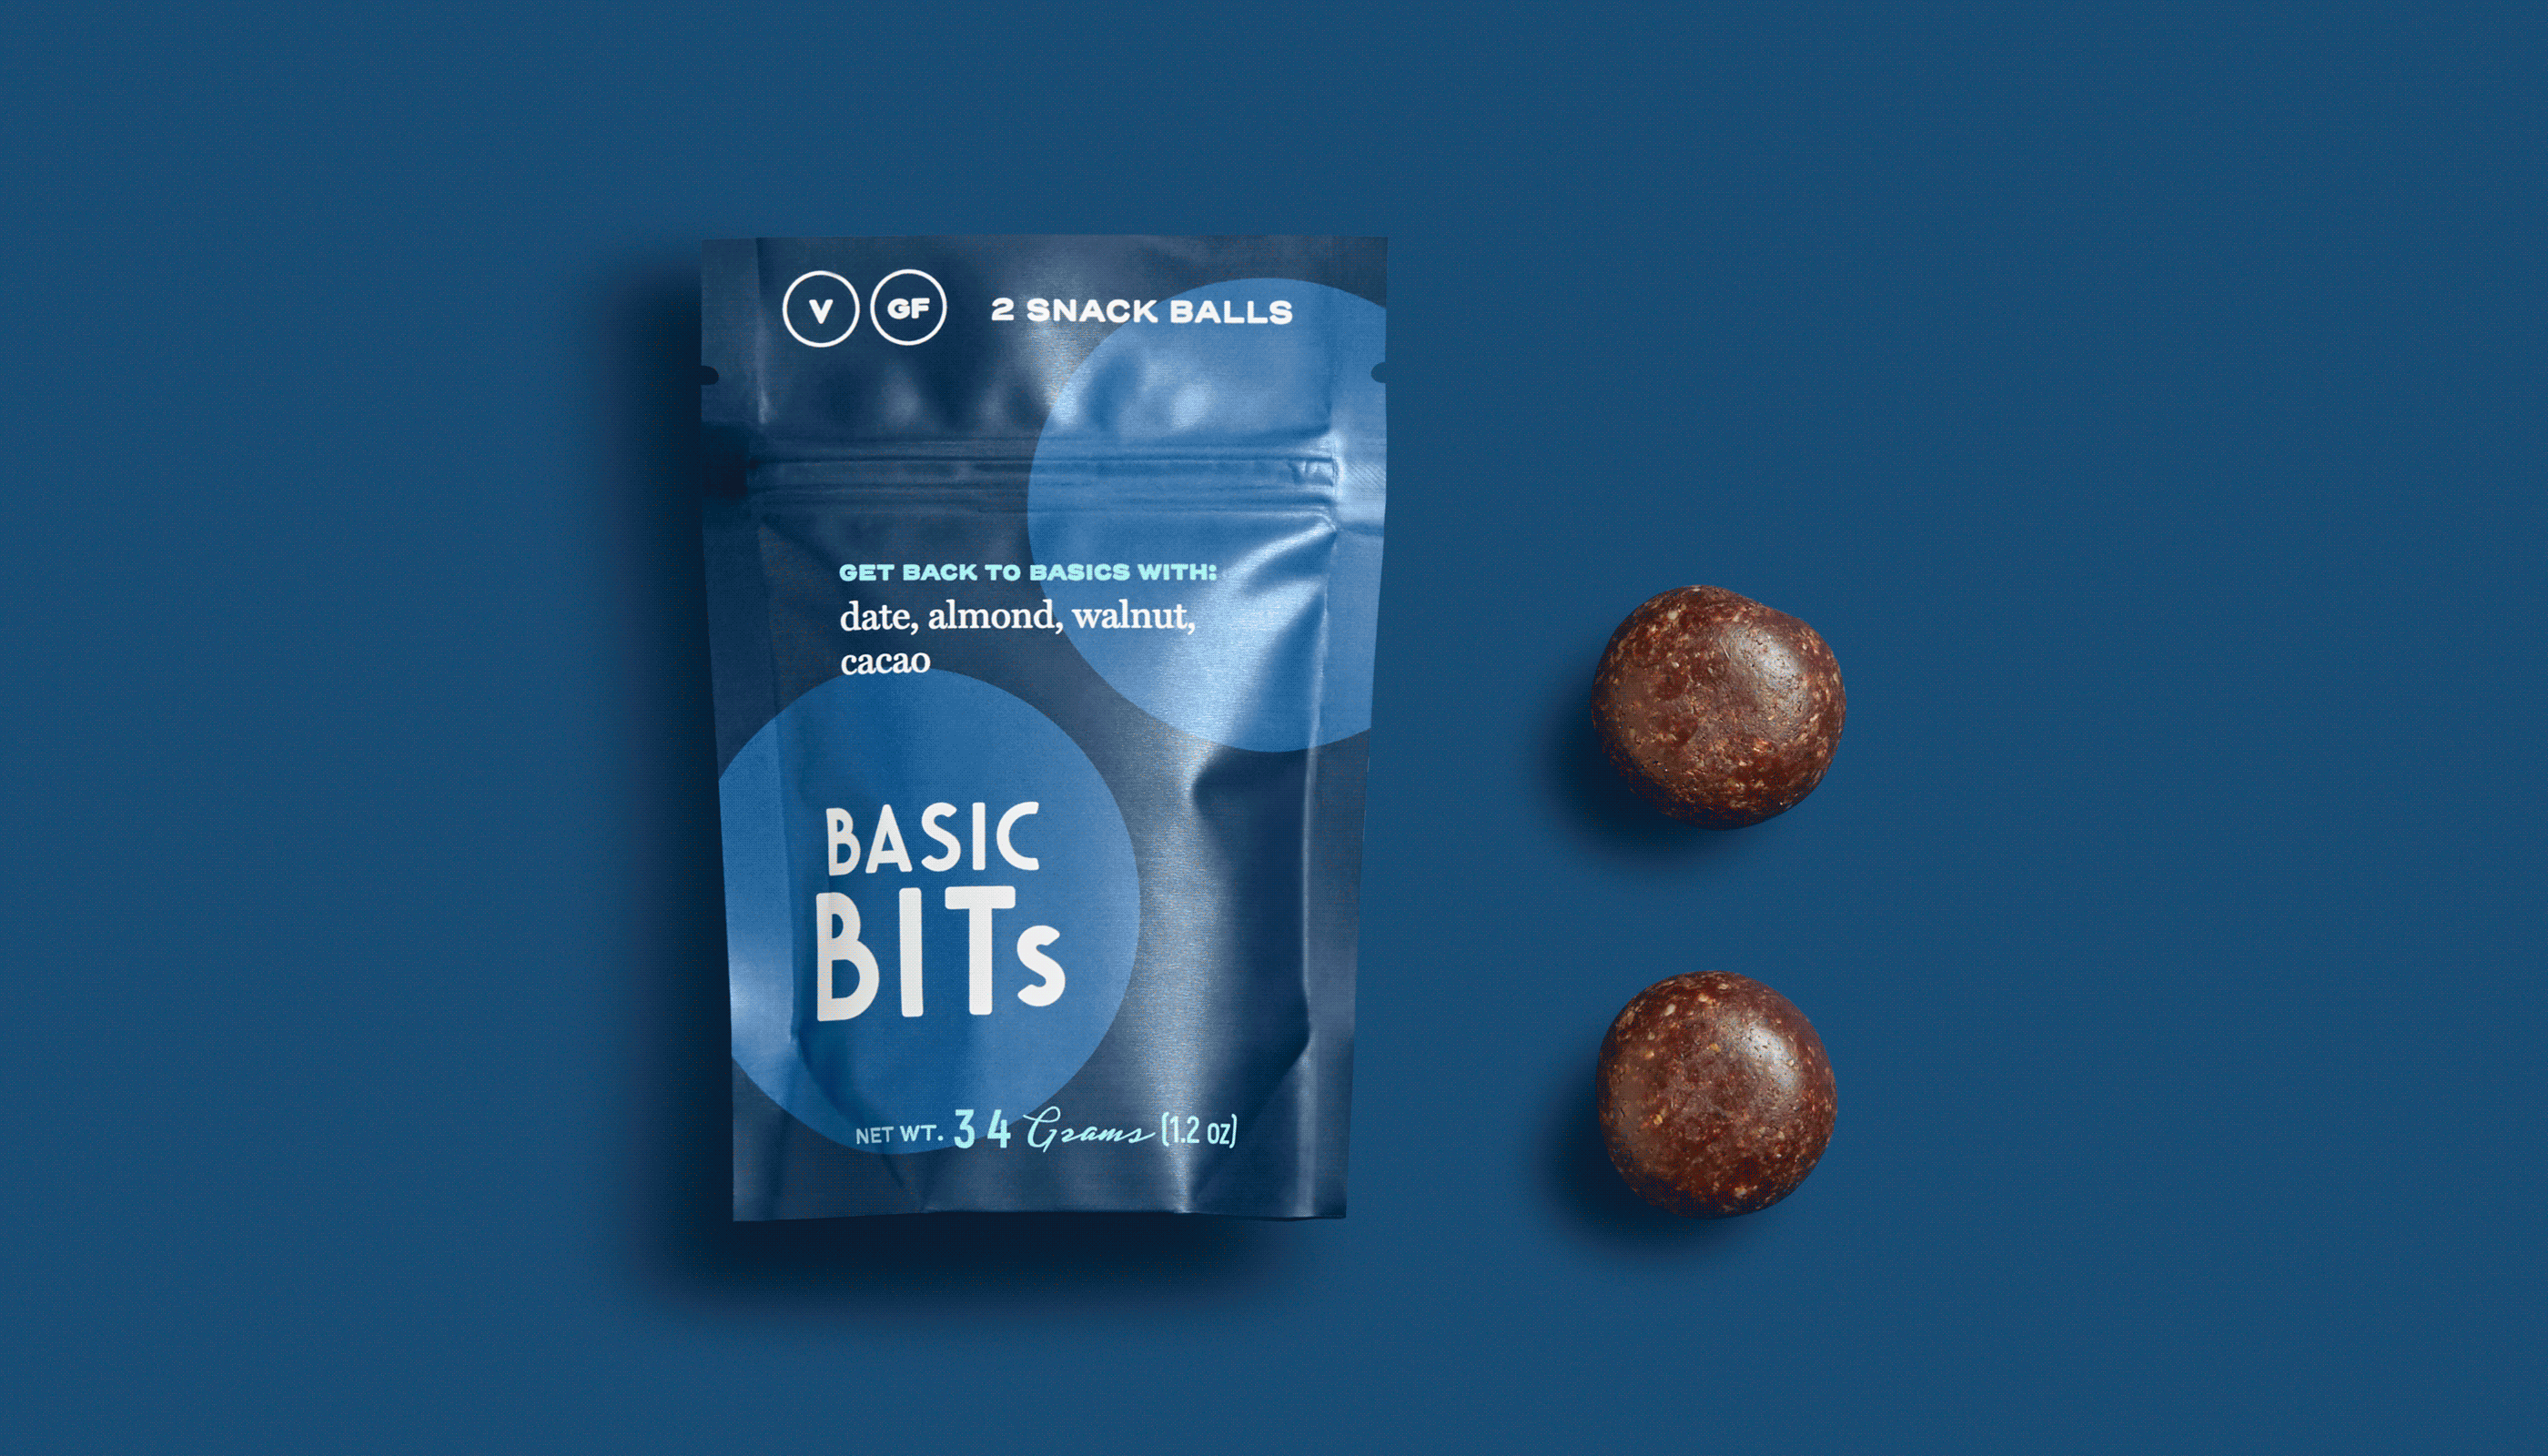 Basic bits snack ball brand identity food packaging design6